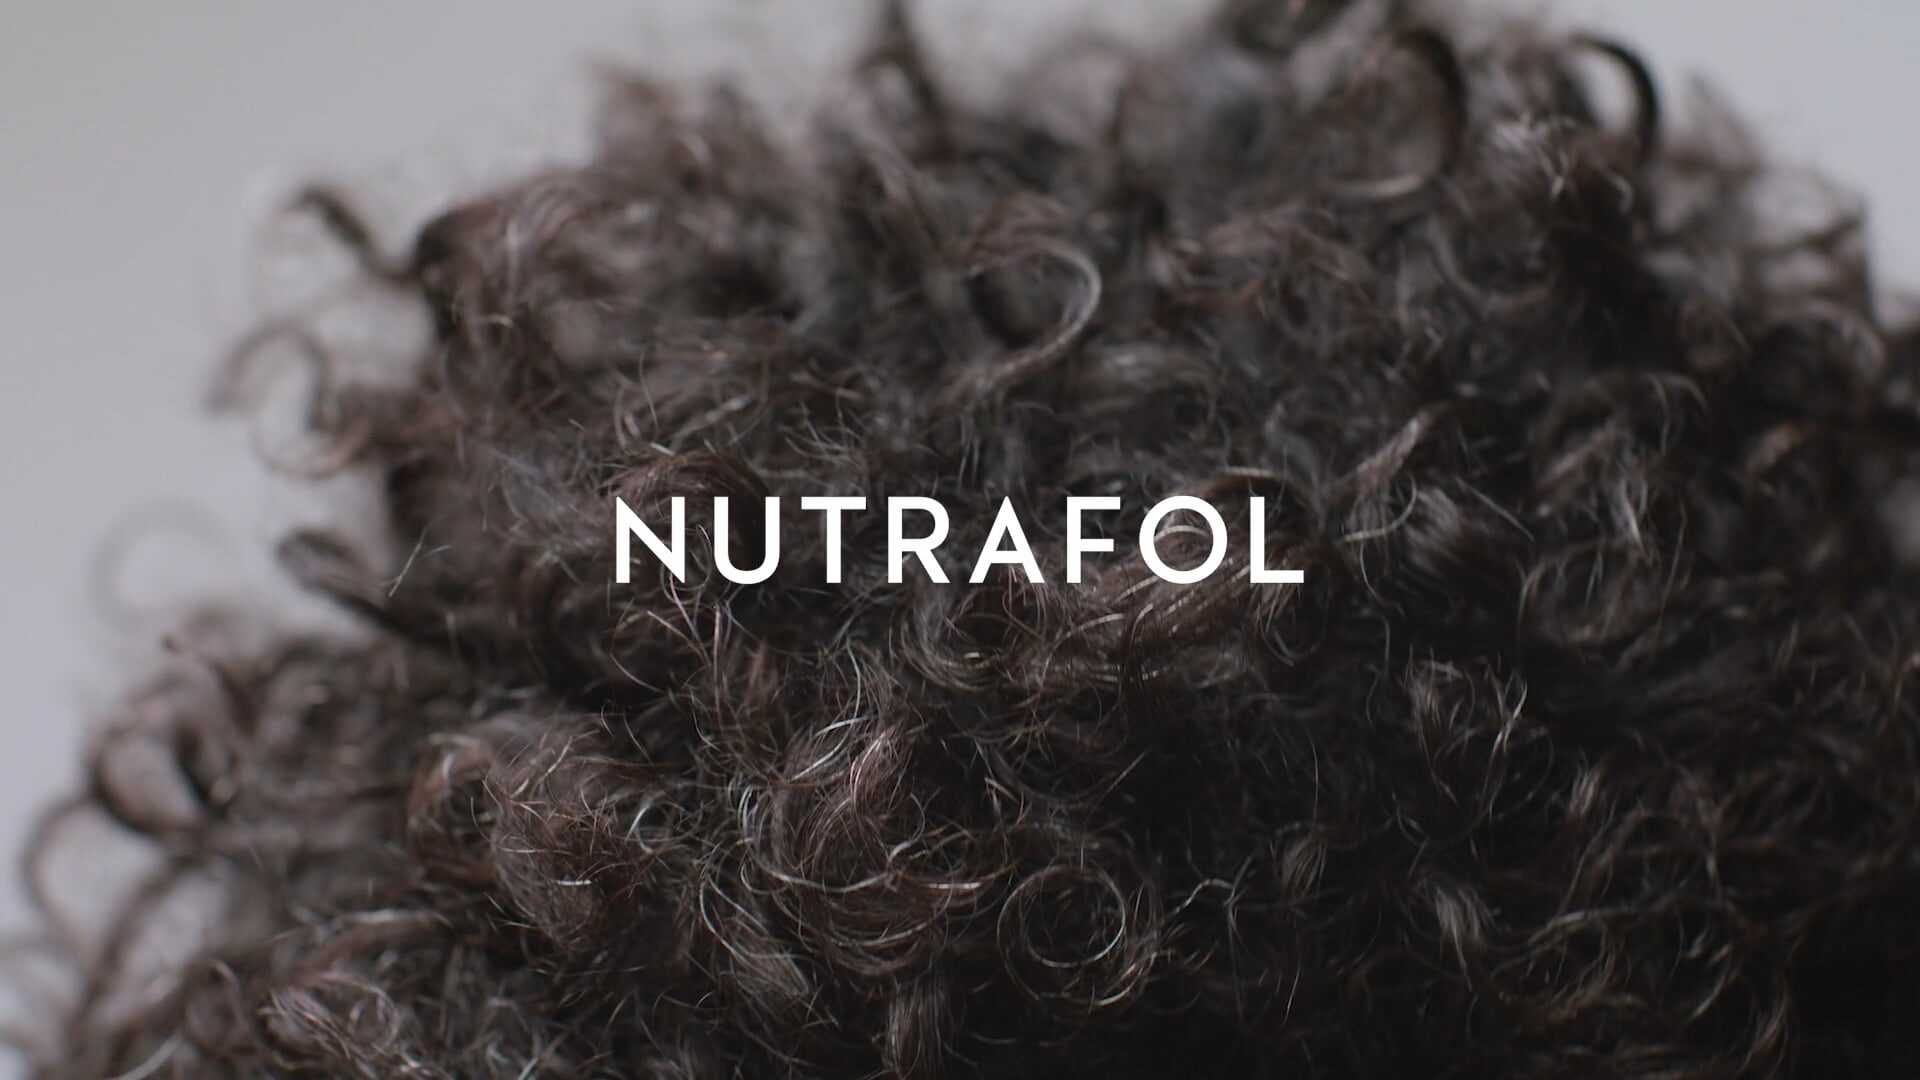 Nutrafol: Youtube & OTT Hair Wellness Campaign